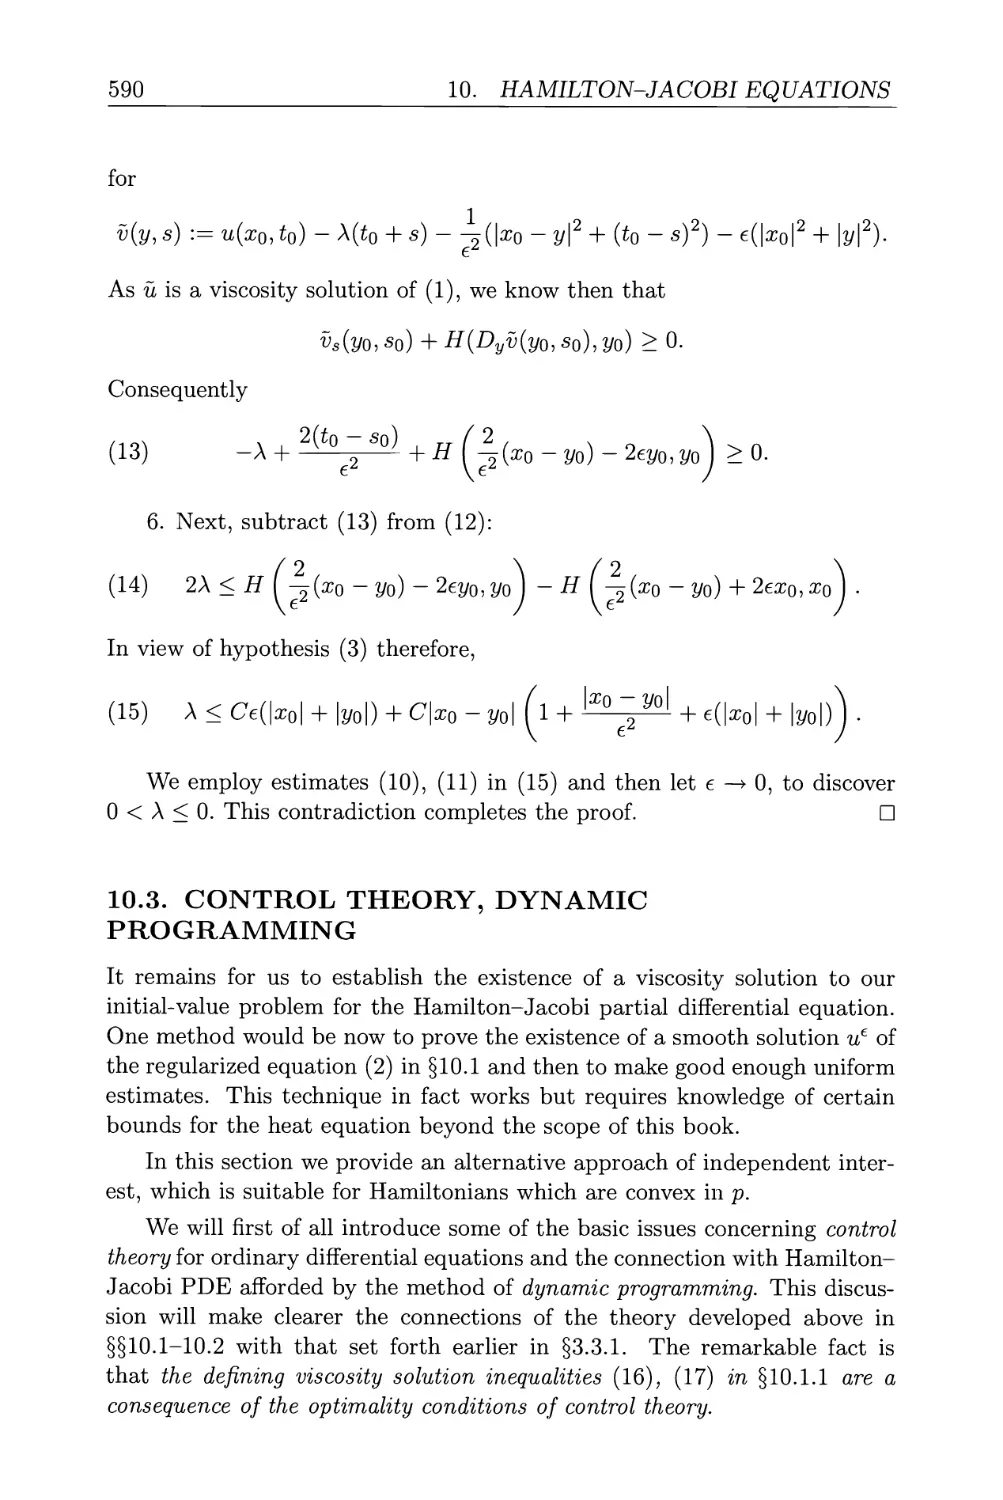 10.3. Control theory, dynamic programming